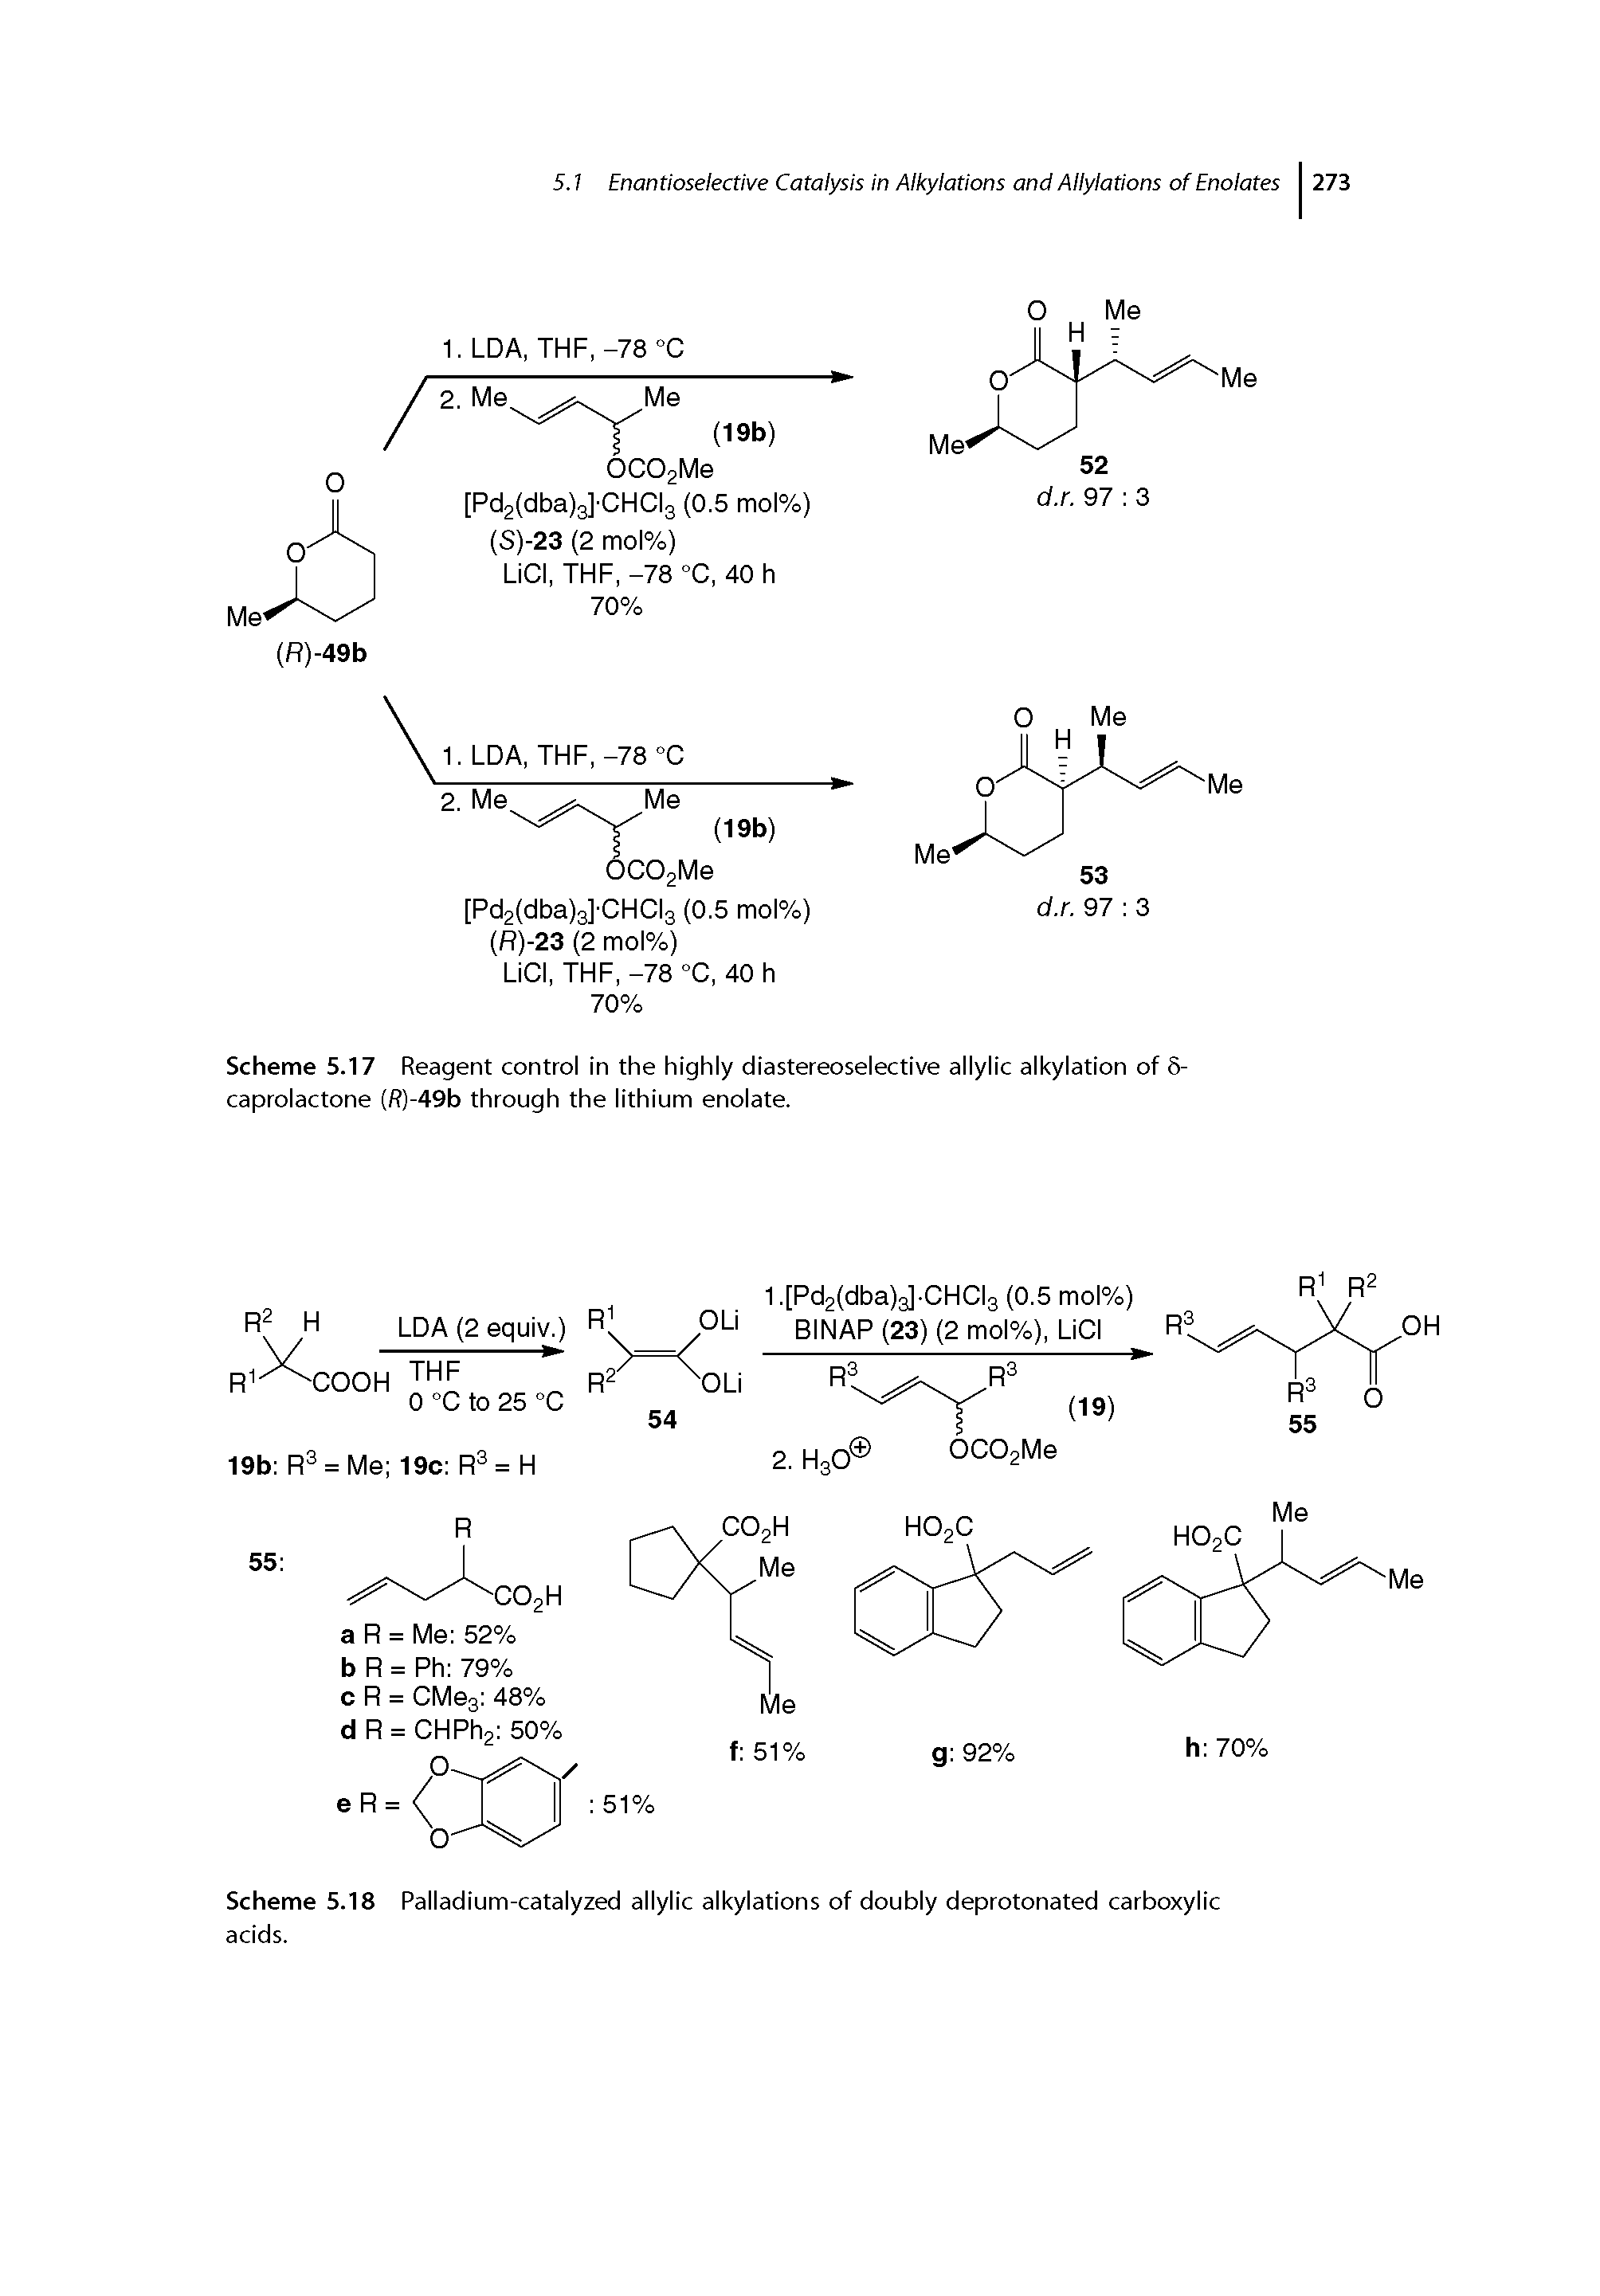 Scheme 5.18 Palladium-catalyzed allylic alkylations of doubly deprotonated carboxylic acids.